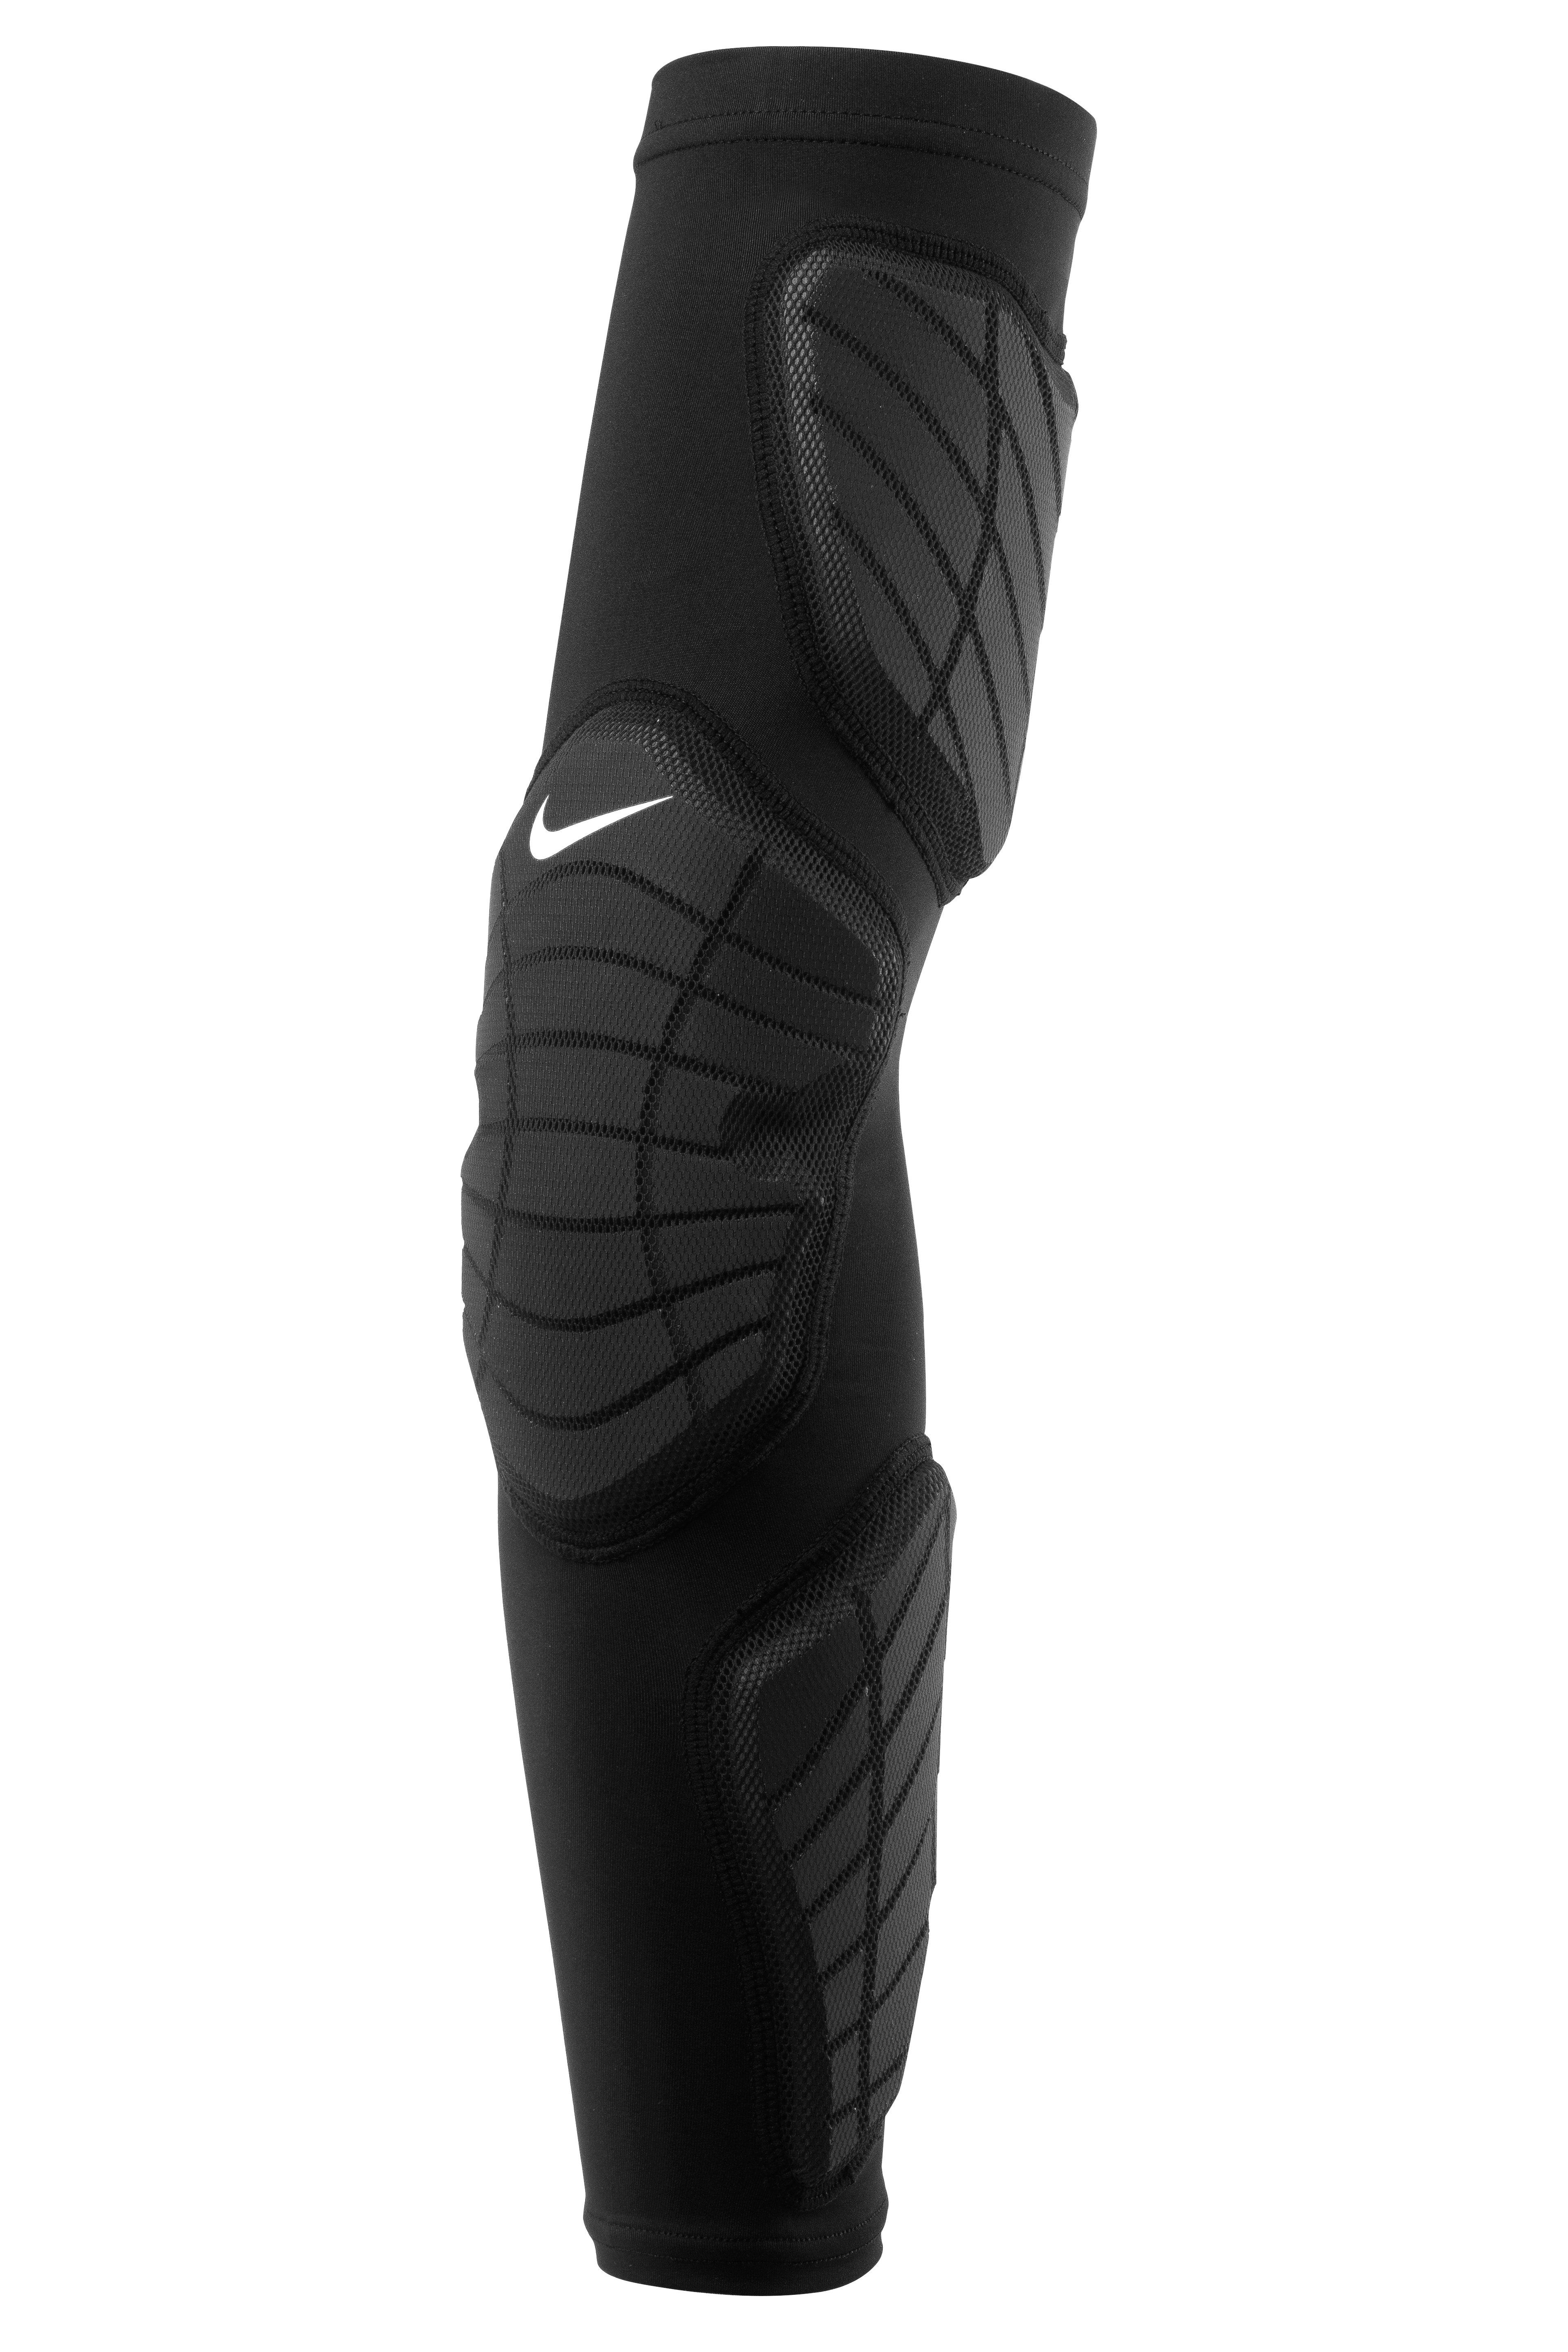 How to properly wear a Nike pro football arm sleeve｜TikTok Search